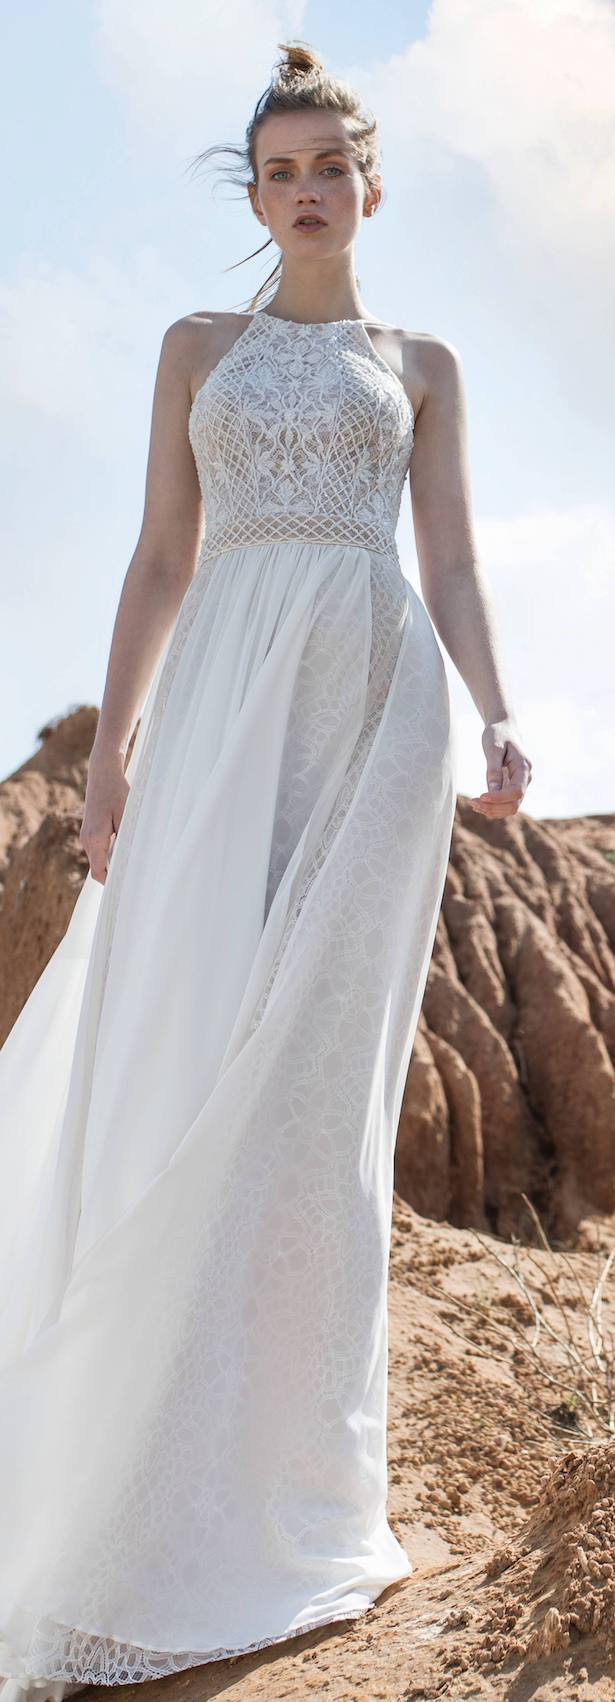 Wedding Dress by Limor Rosen Bridal Couture 2018 Free Spirit Collection - Whitney